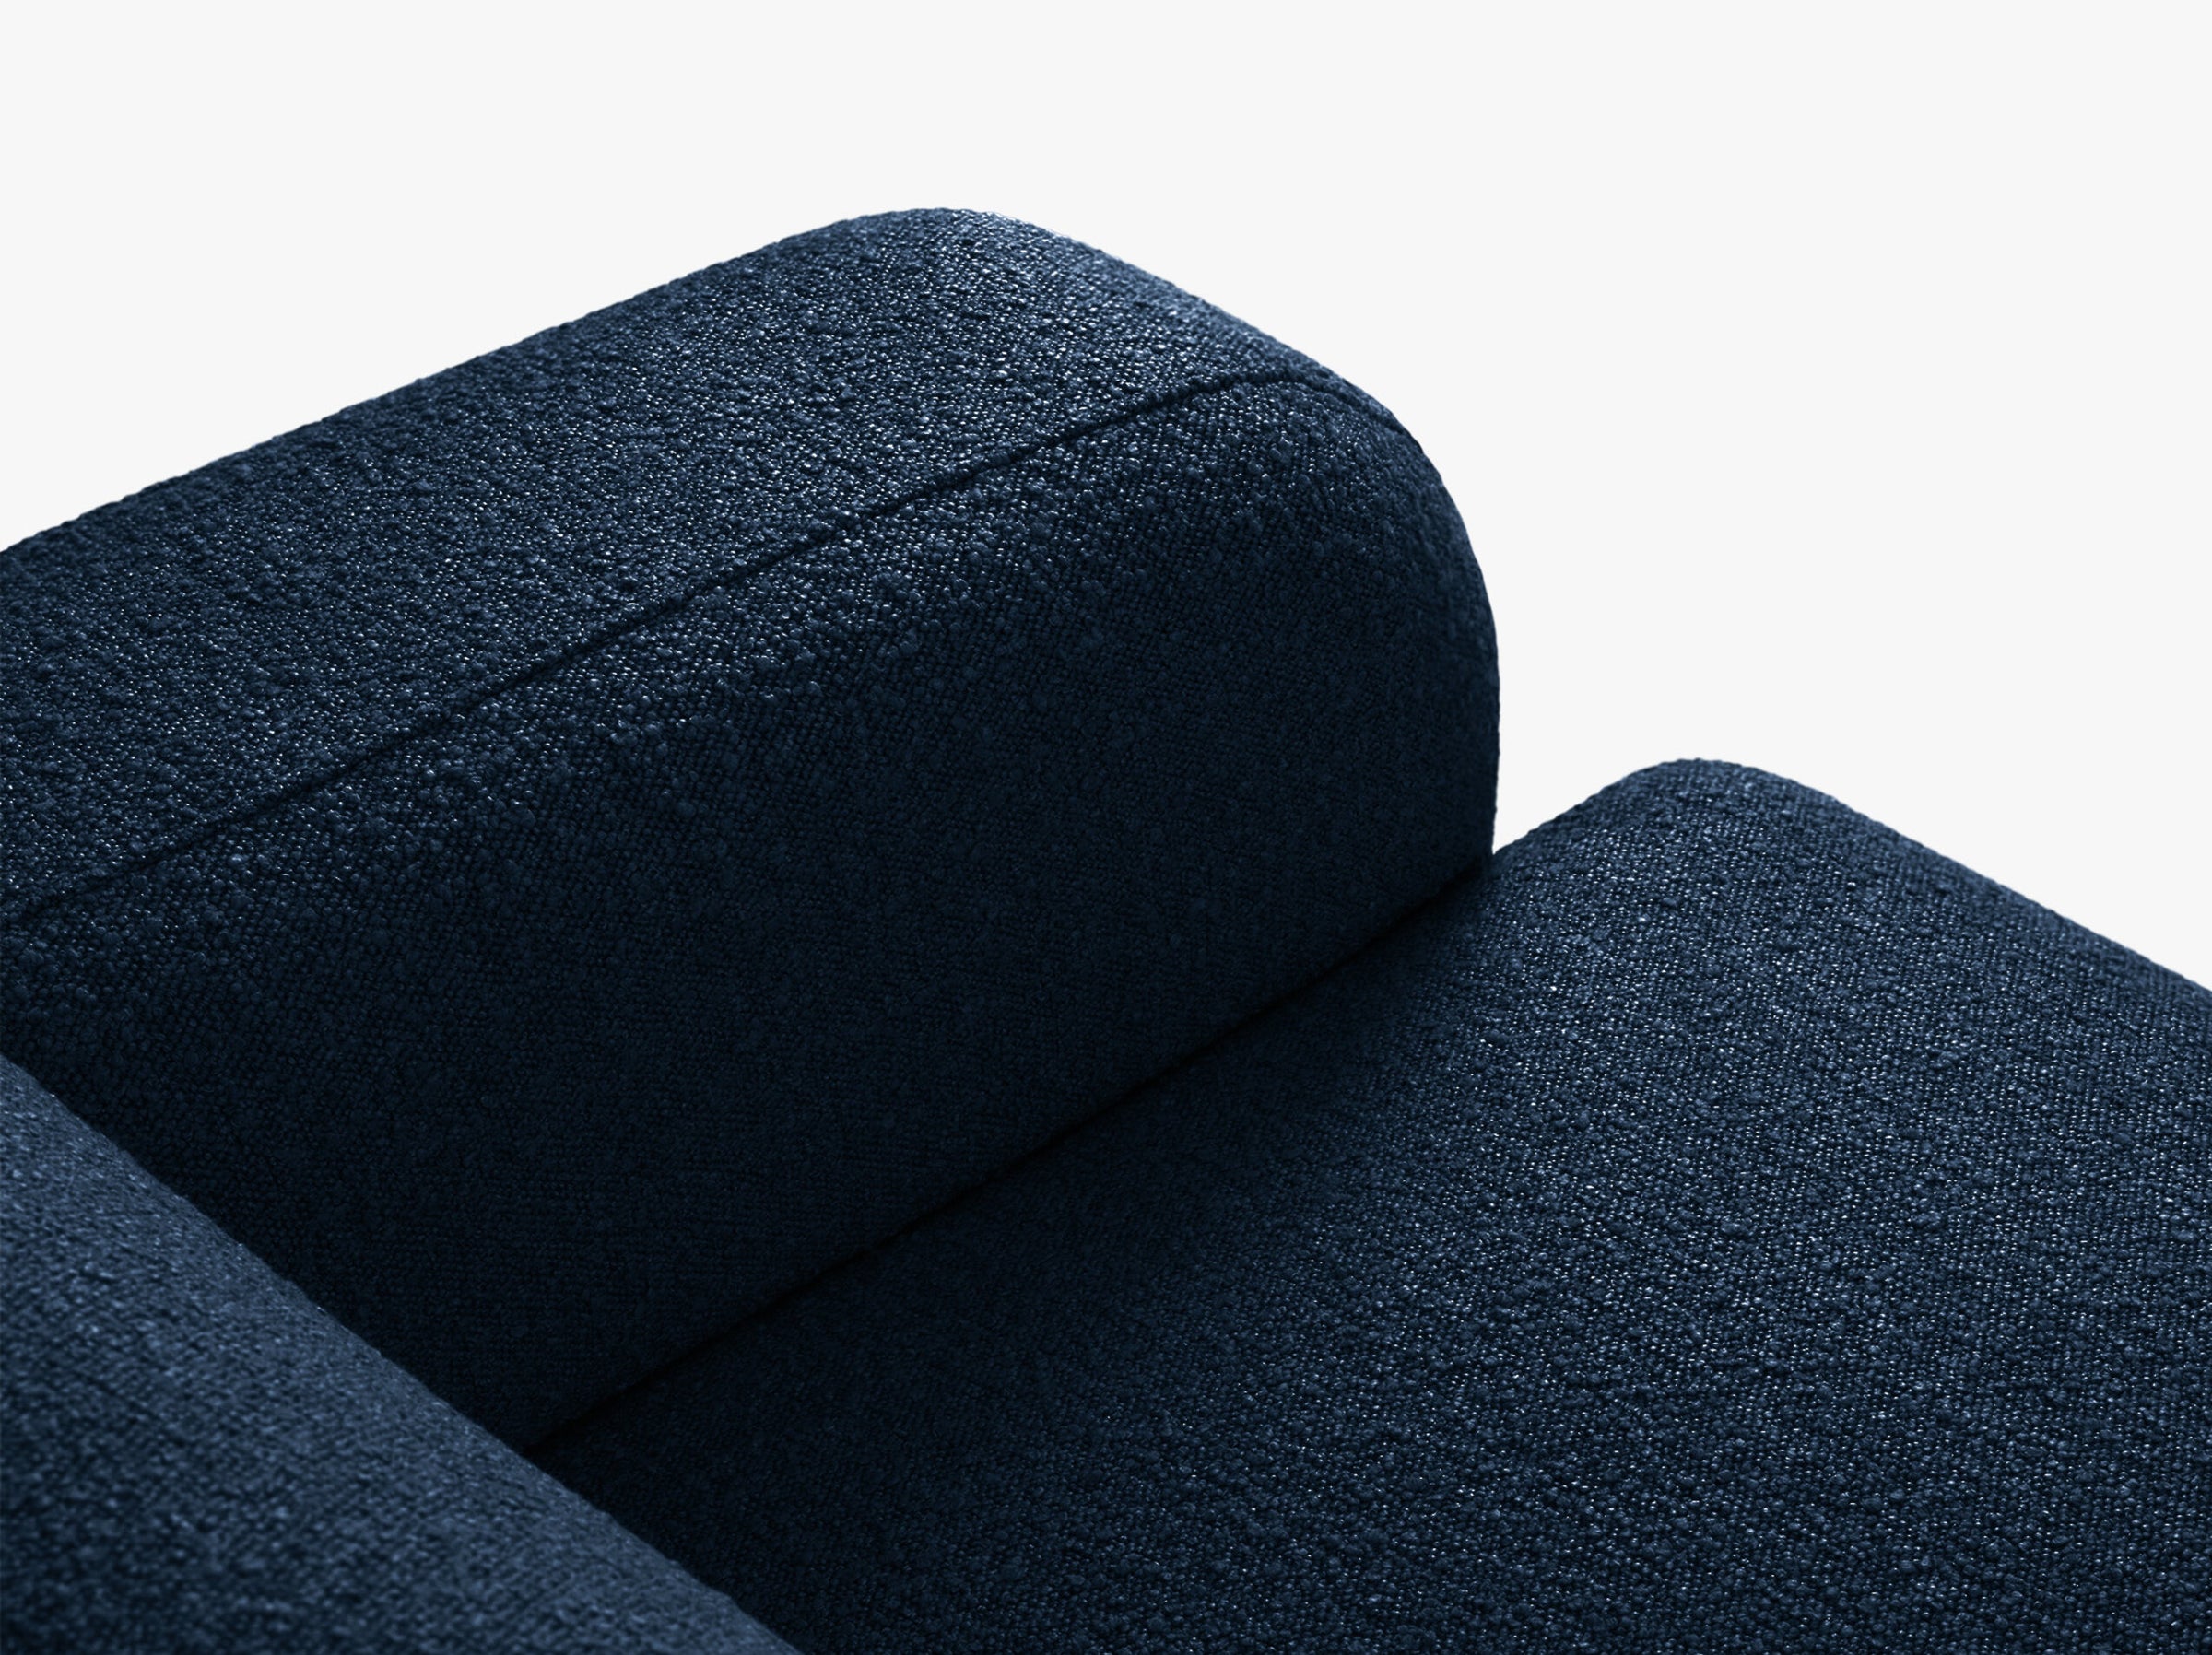 Molino sofas boucle dark blue